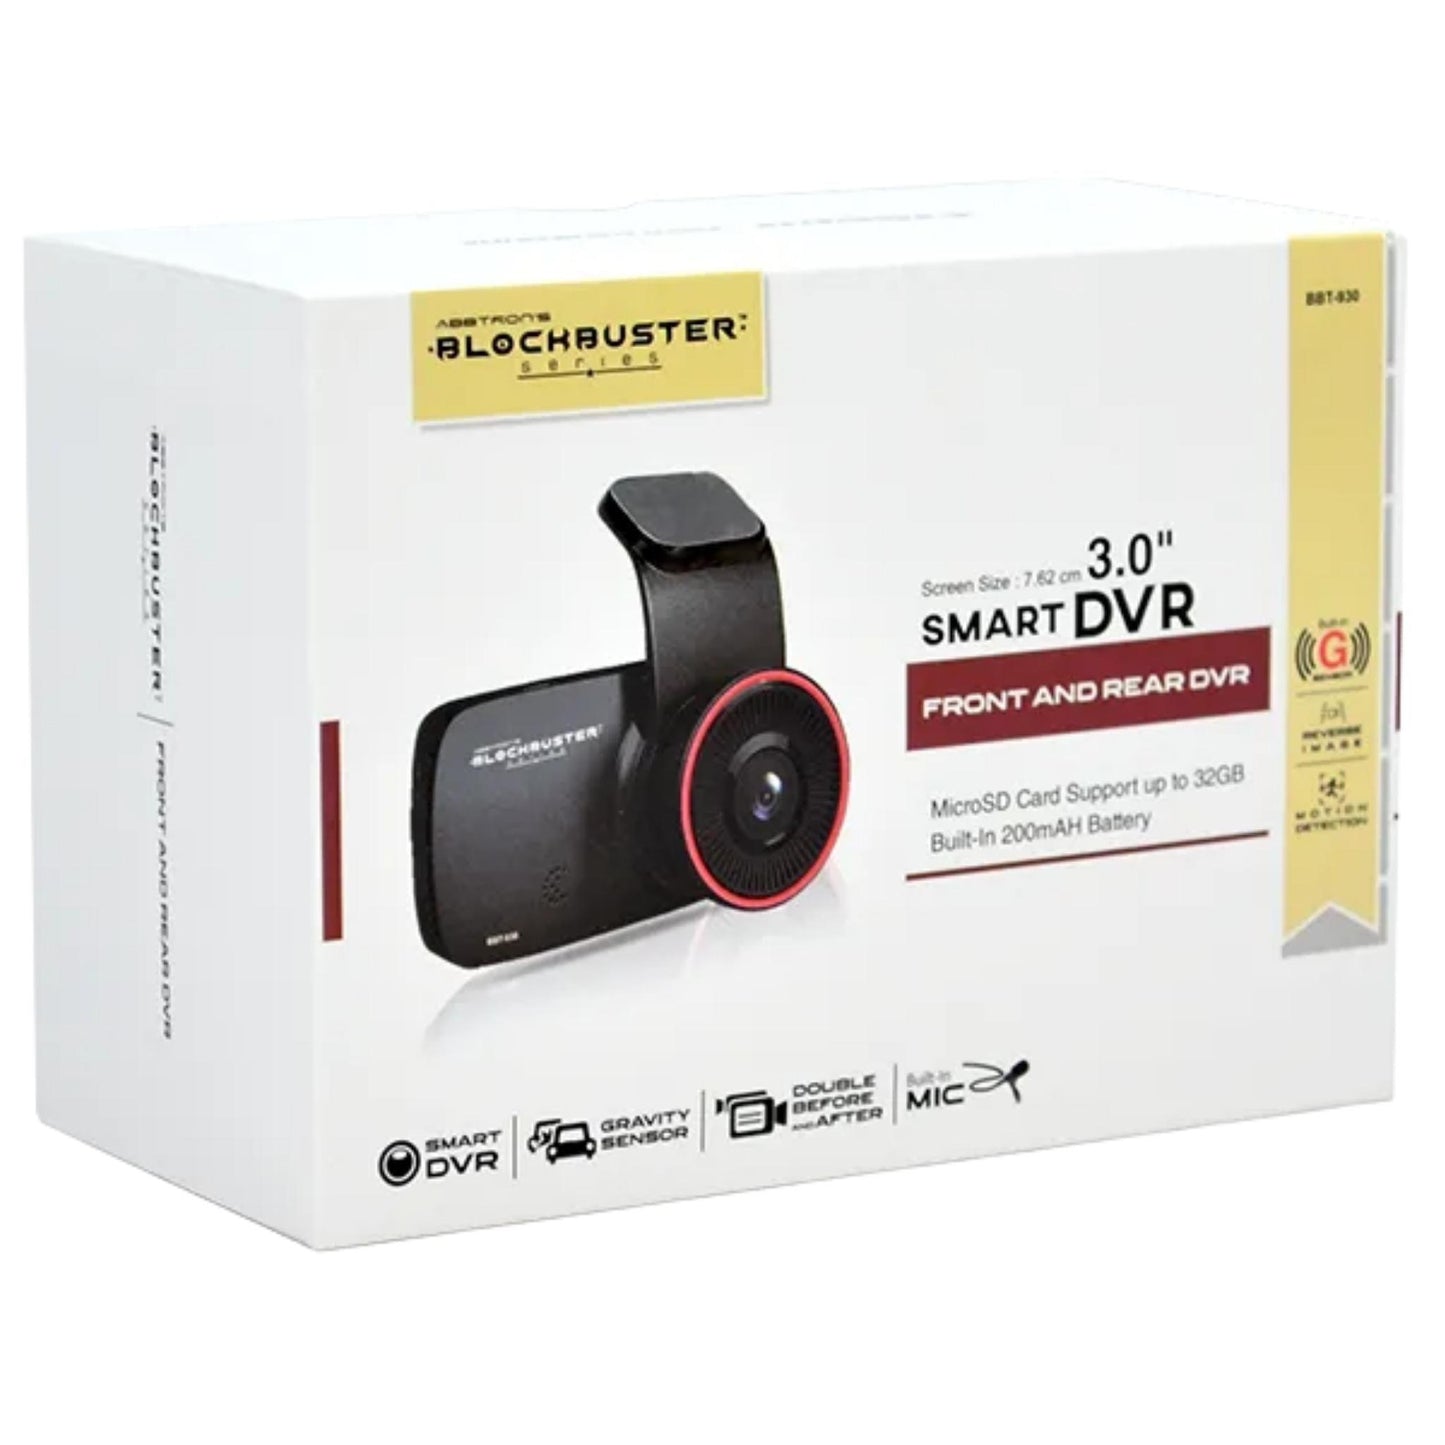 In Car Dash Camera | Blockbuster BBT-930 Packing